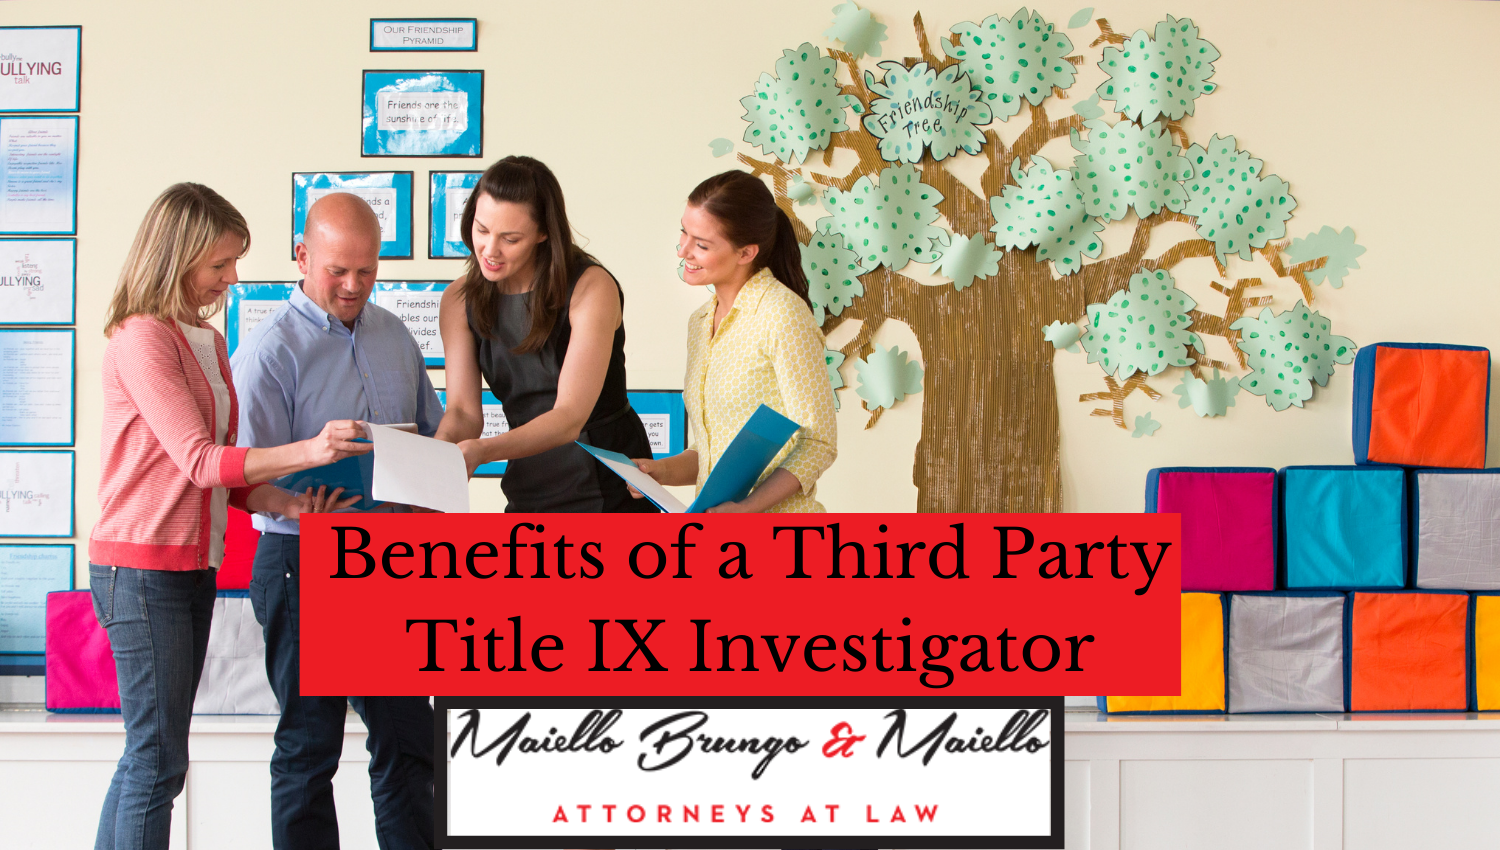 Third Party Title IX Investigator Benefits